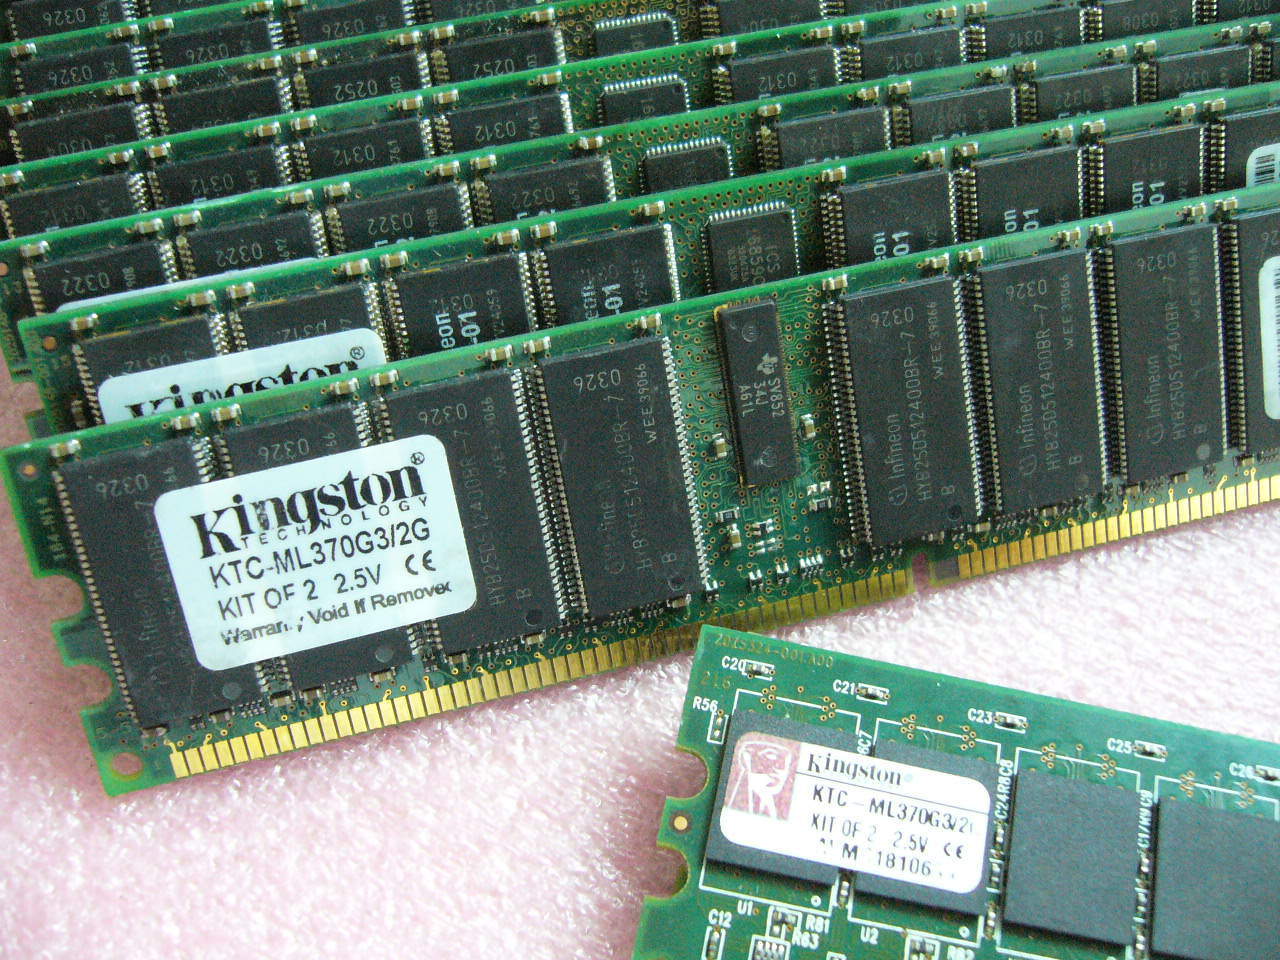 QTY 1x 1GB Kingston KTC-ML370G3/2G DDR 266,PC2100R ECC Registered Server memory - Click Image to Close